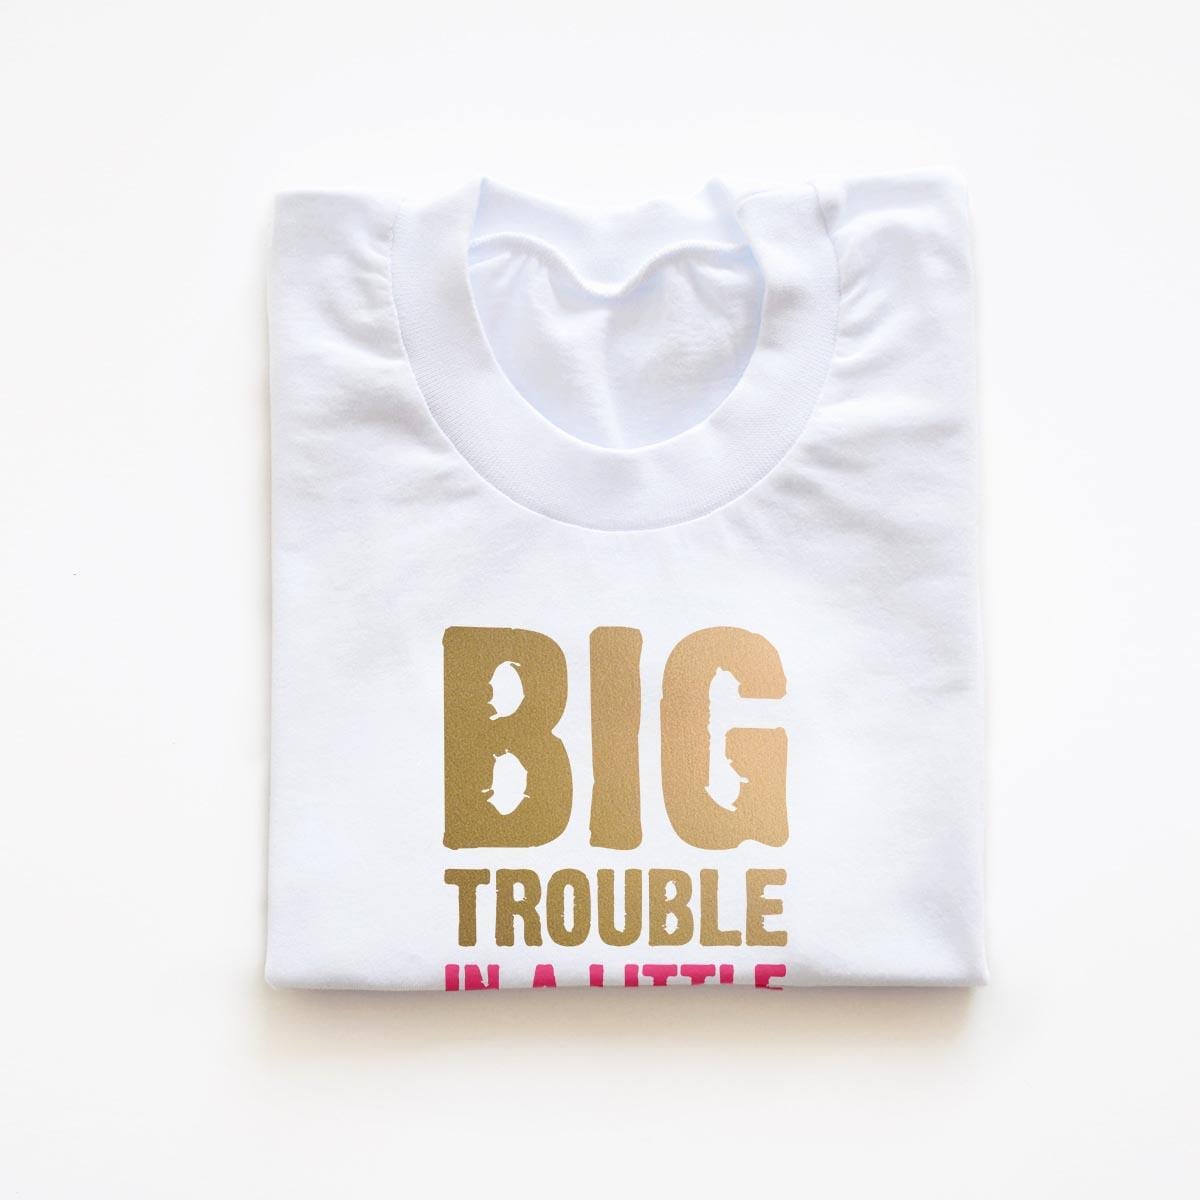 Tricouri copii - Set tricouri BIG Trouble - fetita2